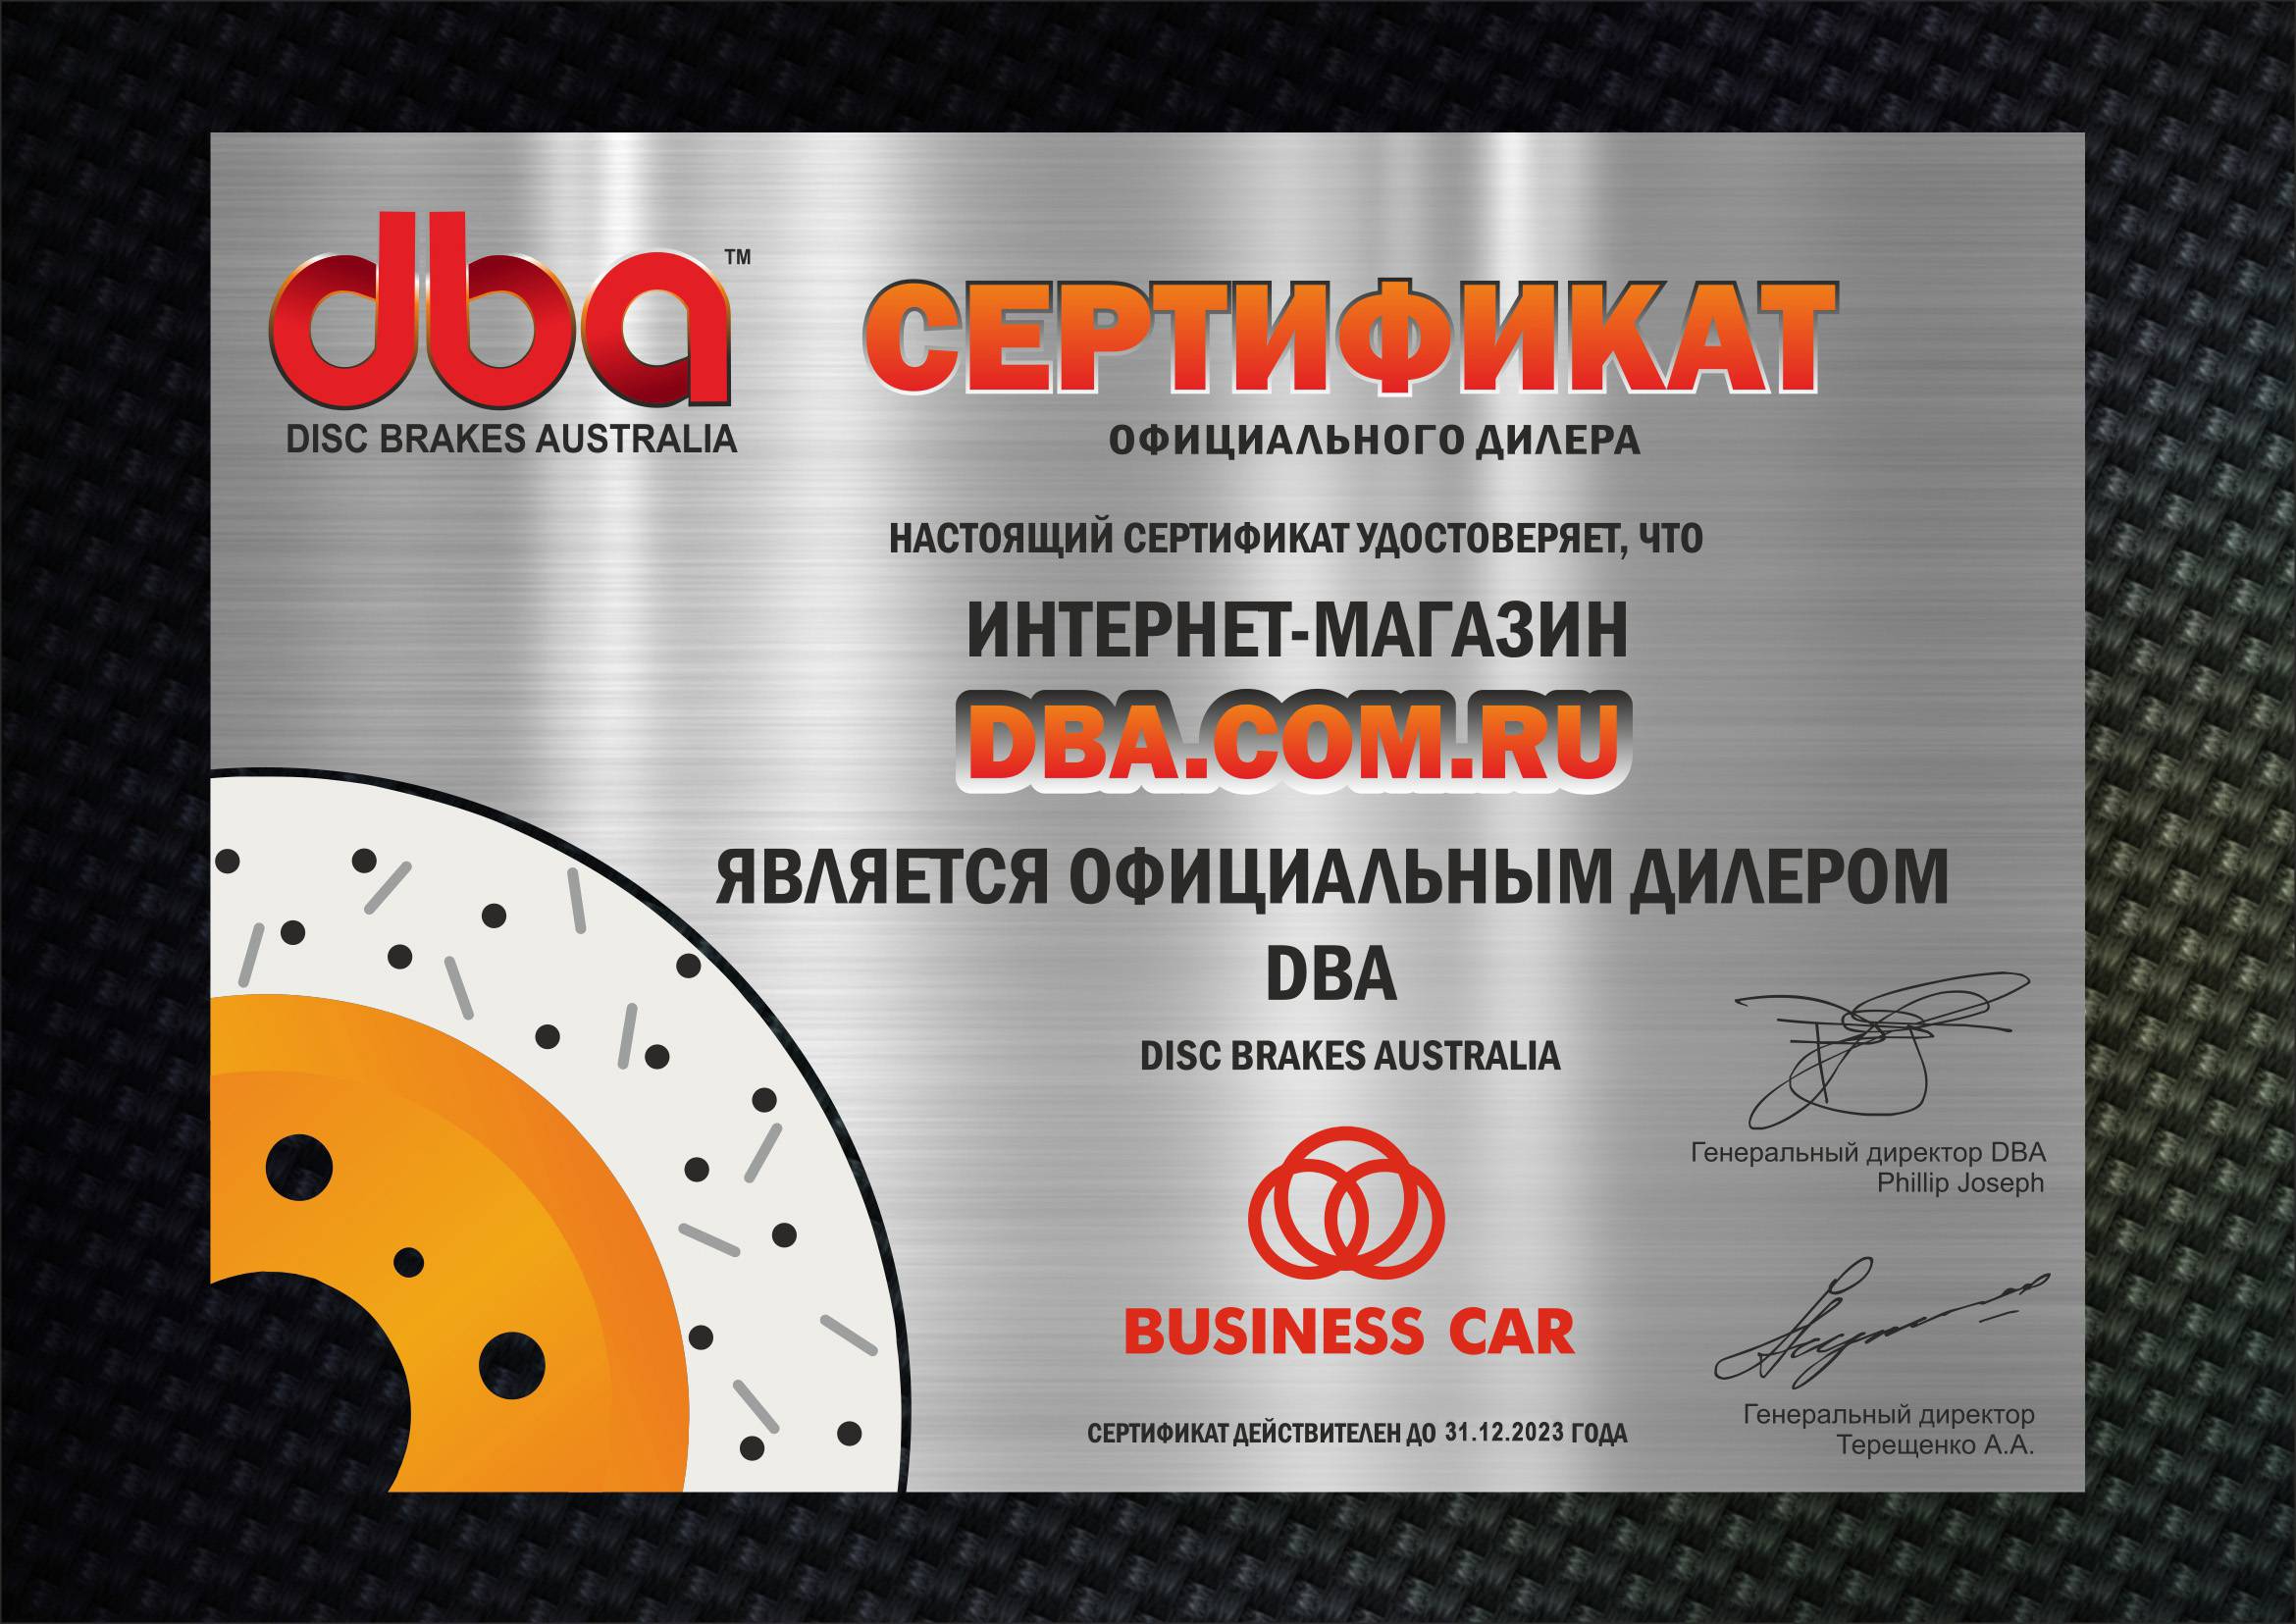   сертификат dba дилер